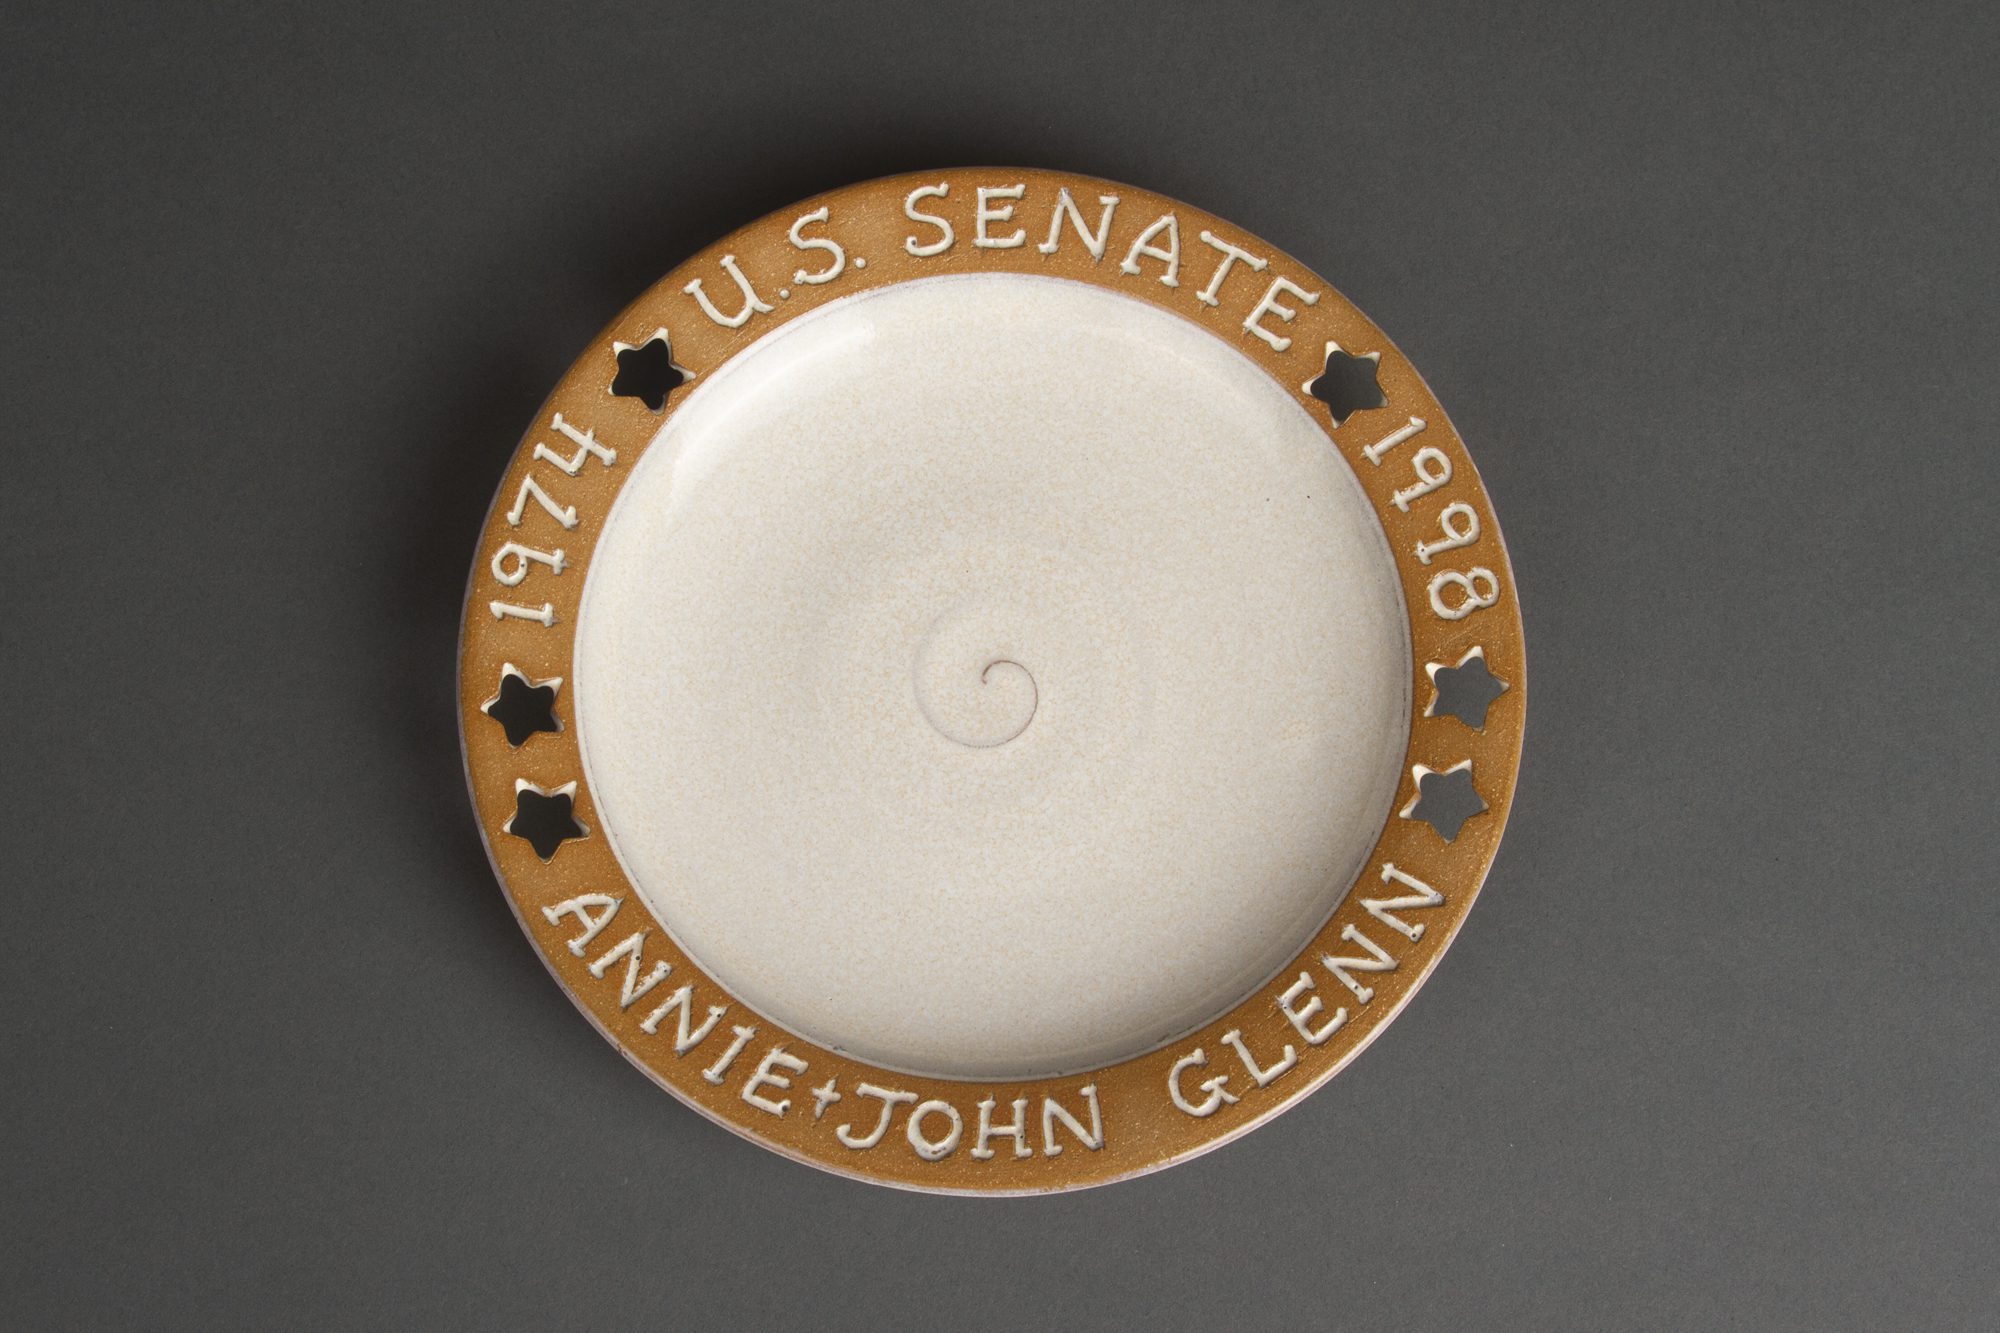 White plate with tan border inscribed with 1974 U.S. Senate 1998 Annie & John Glenn